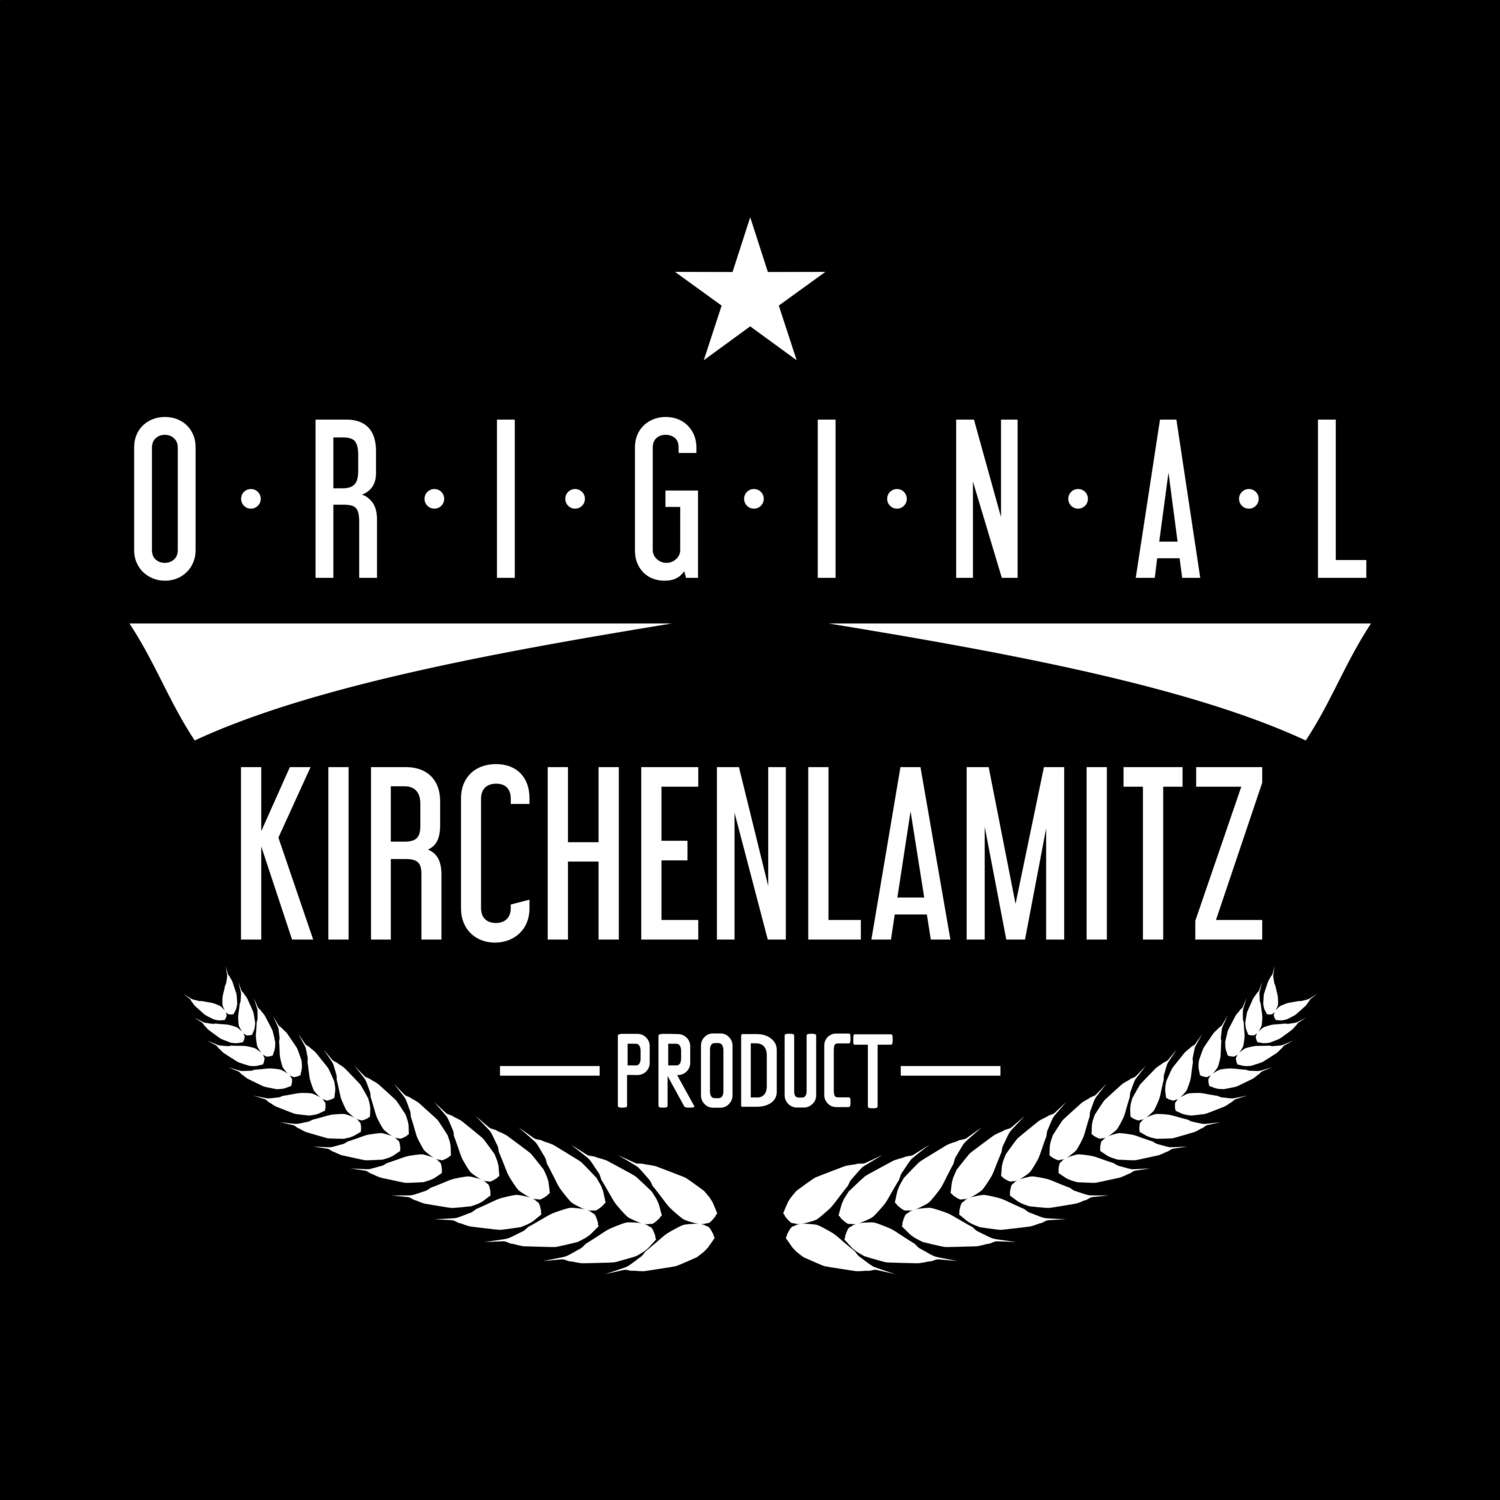 Kirchenlamitz T-Shirt »Original Product«